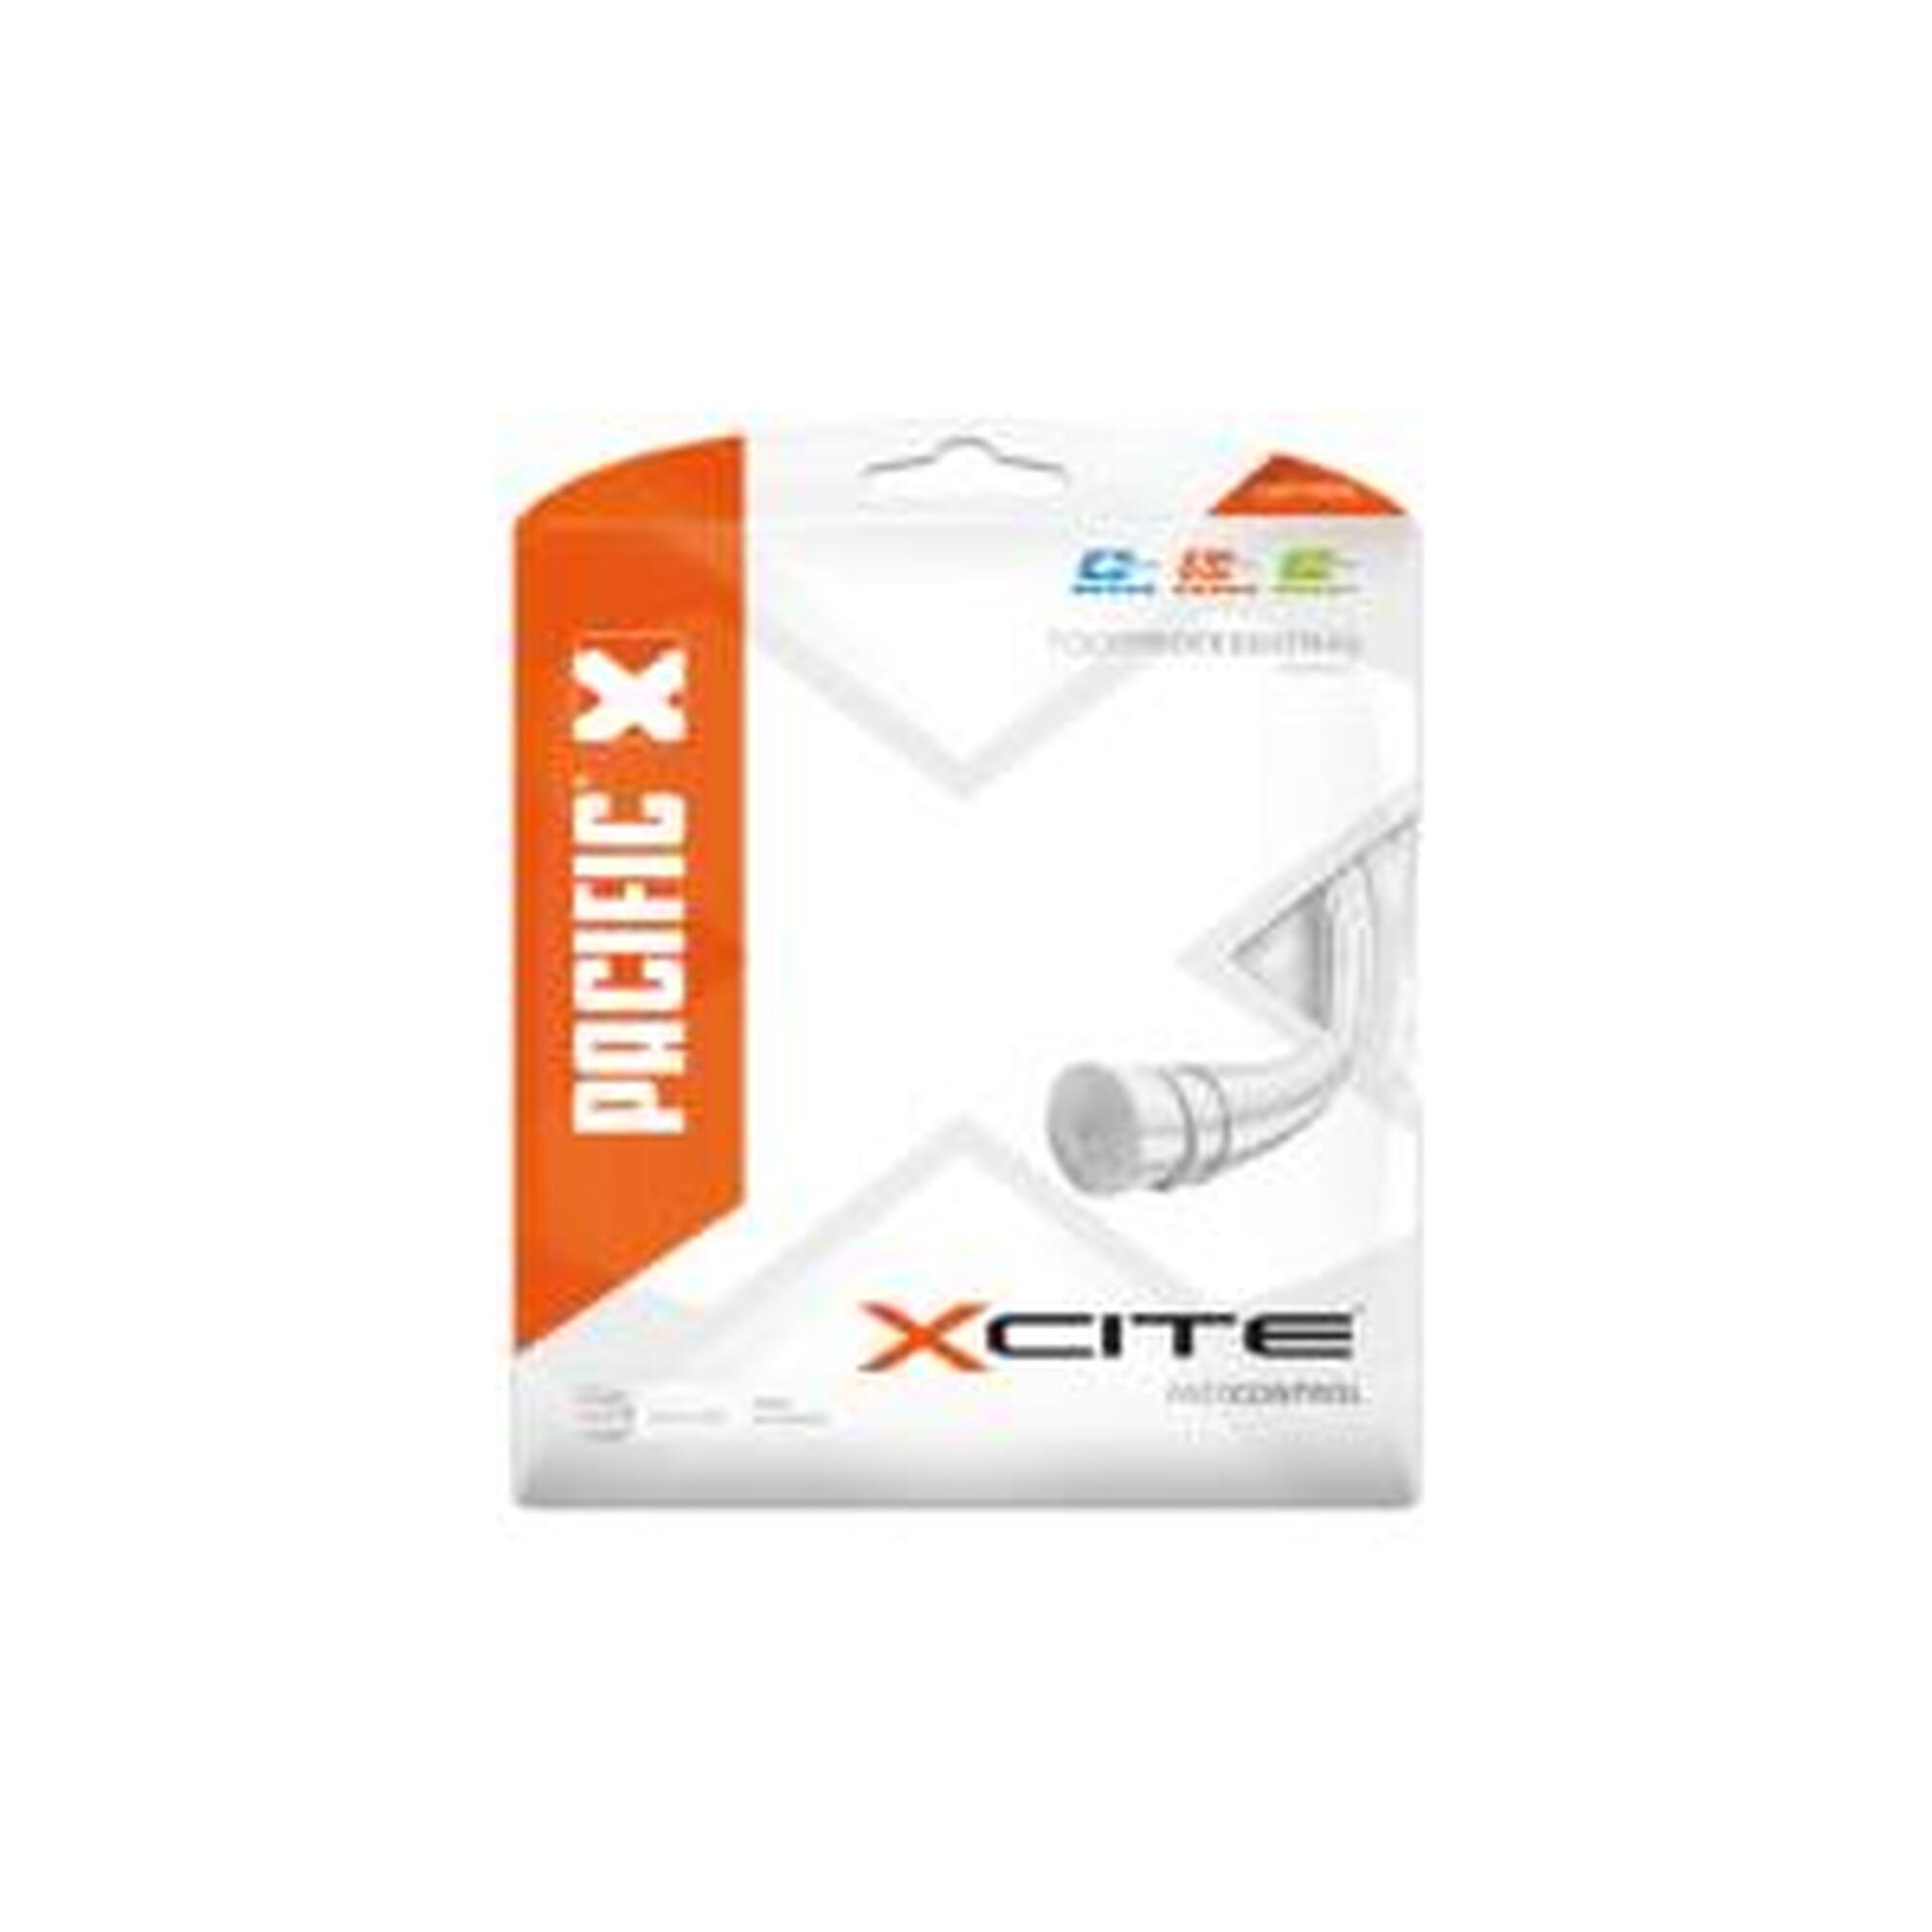 PACIFIC X Cite — струны/набор, белый